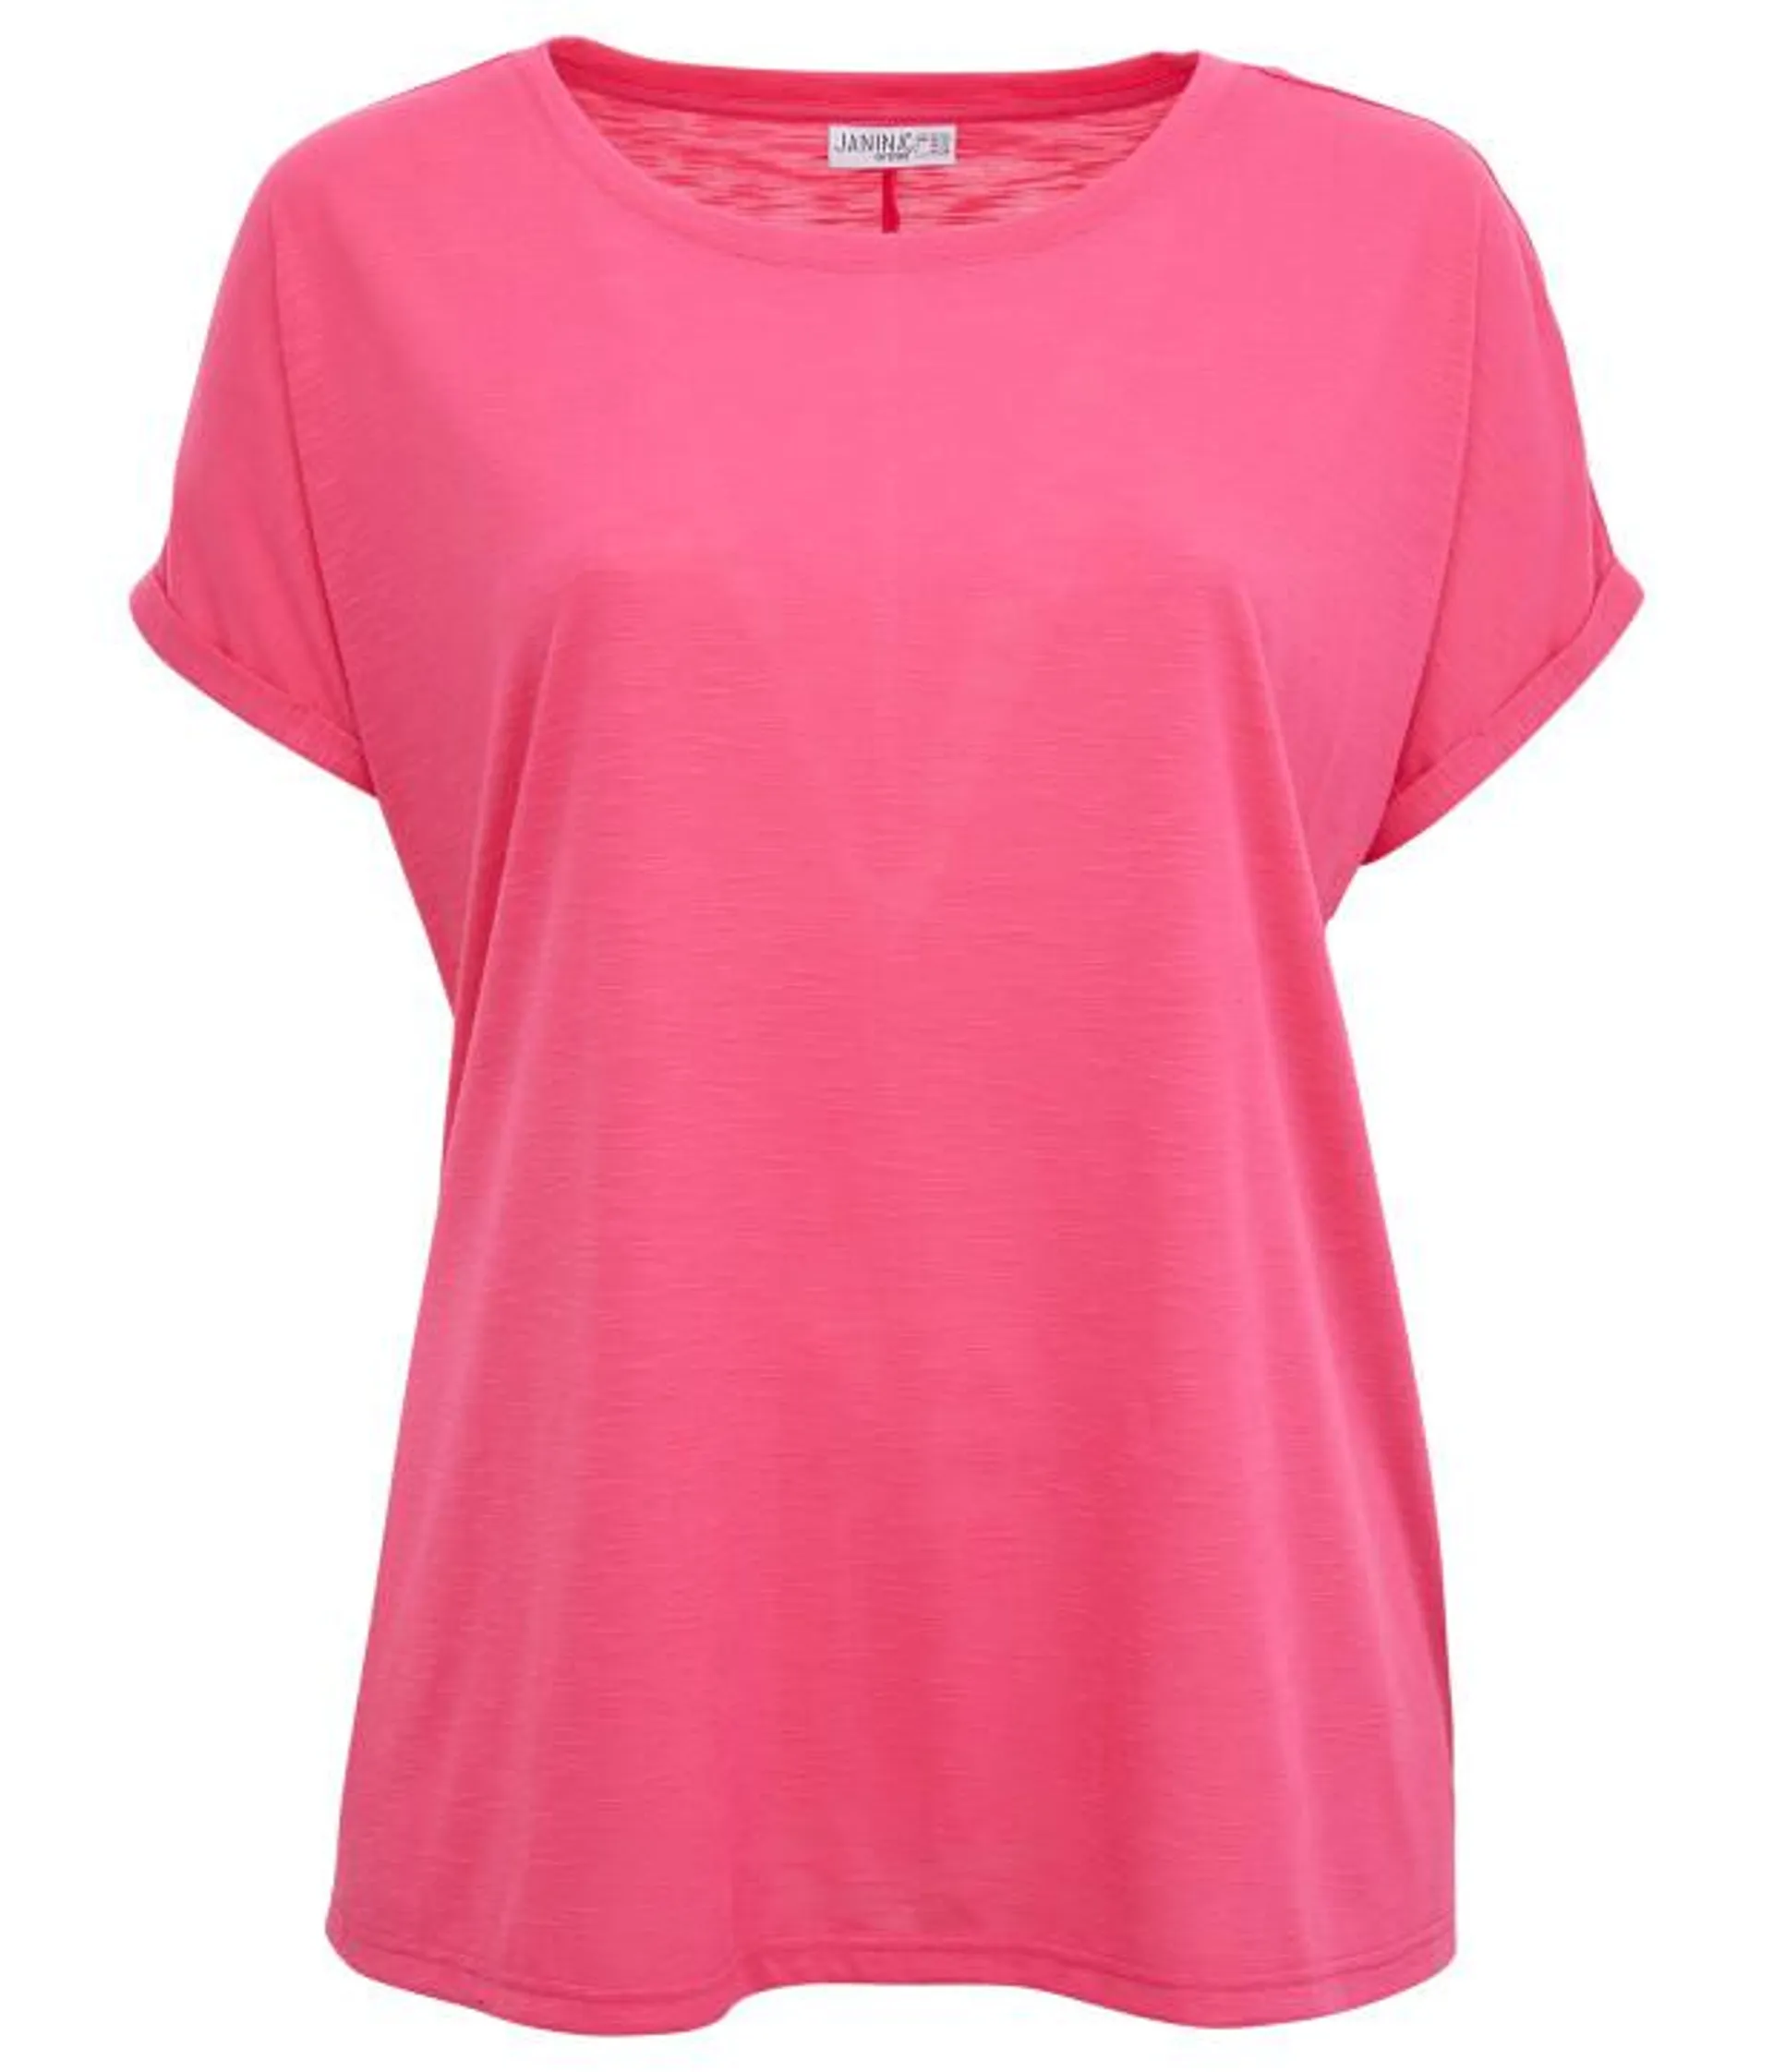 Pinkes T-Shirt